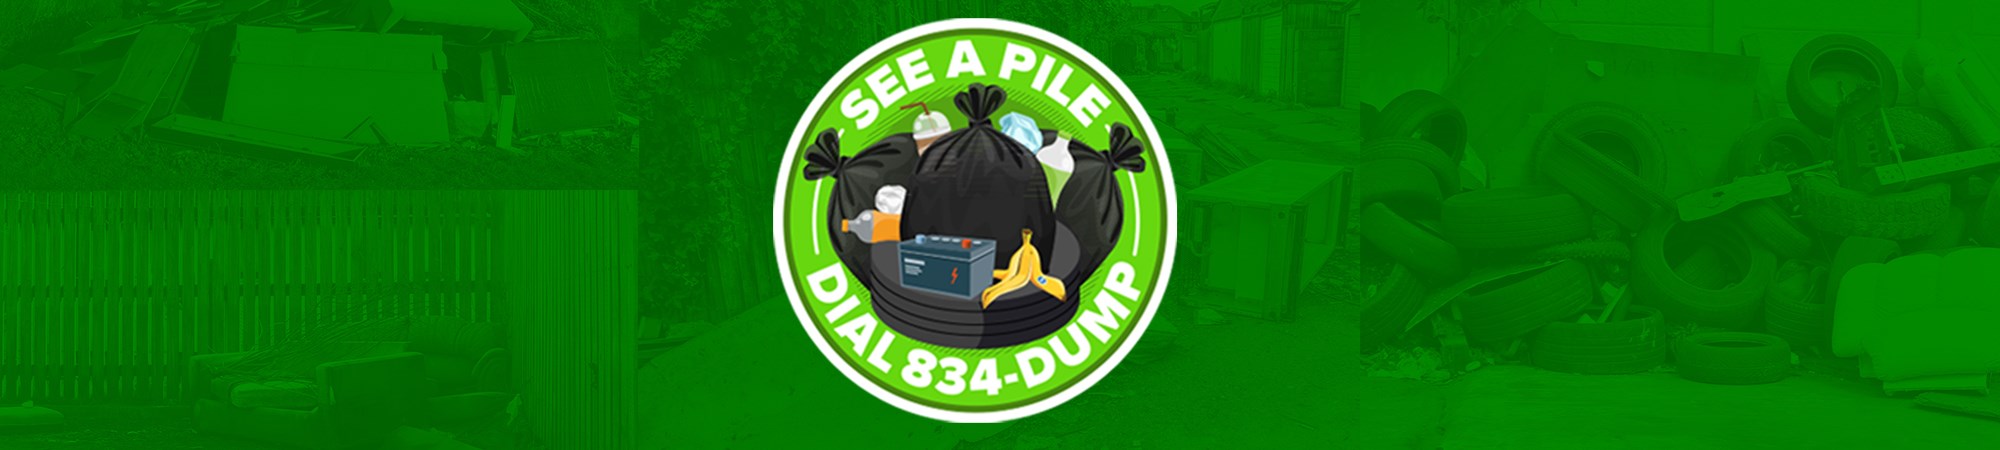 834-Dump logo ad